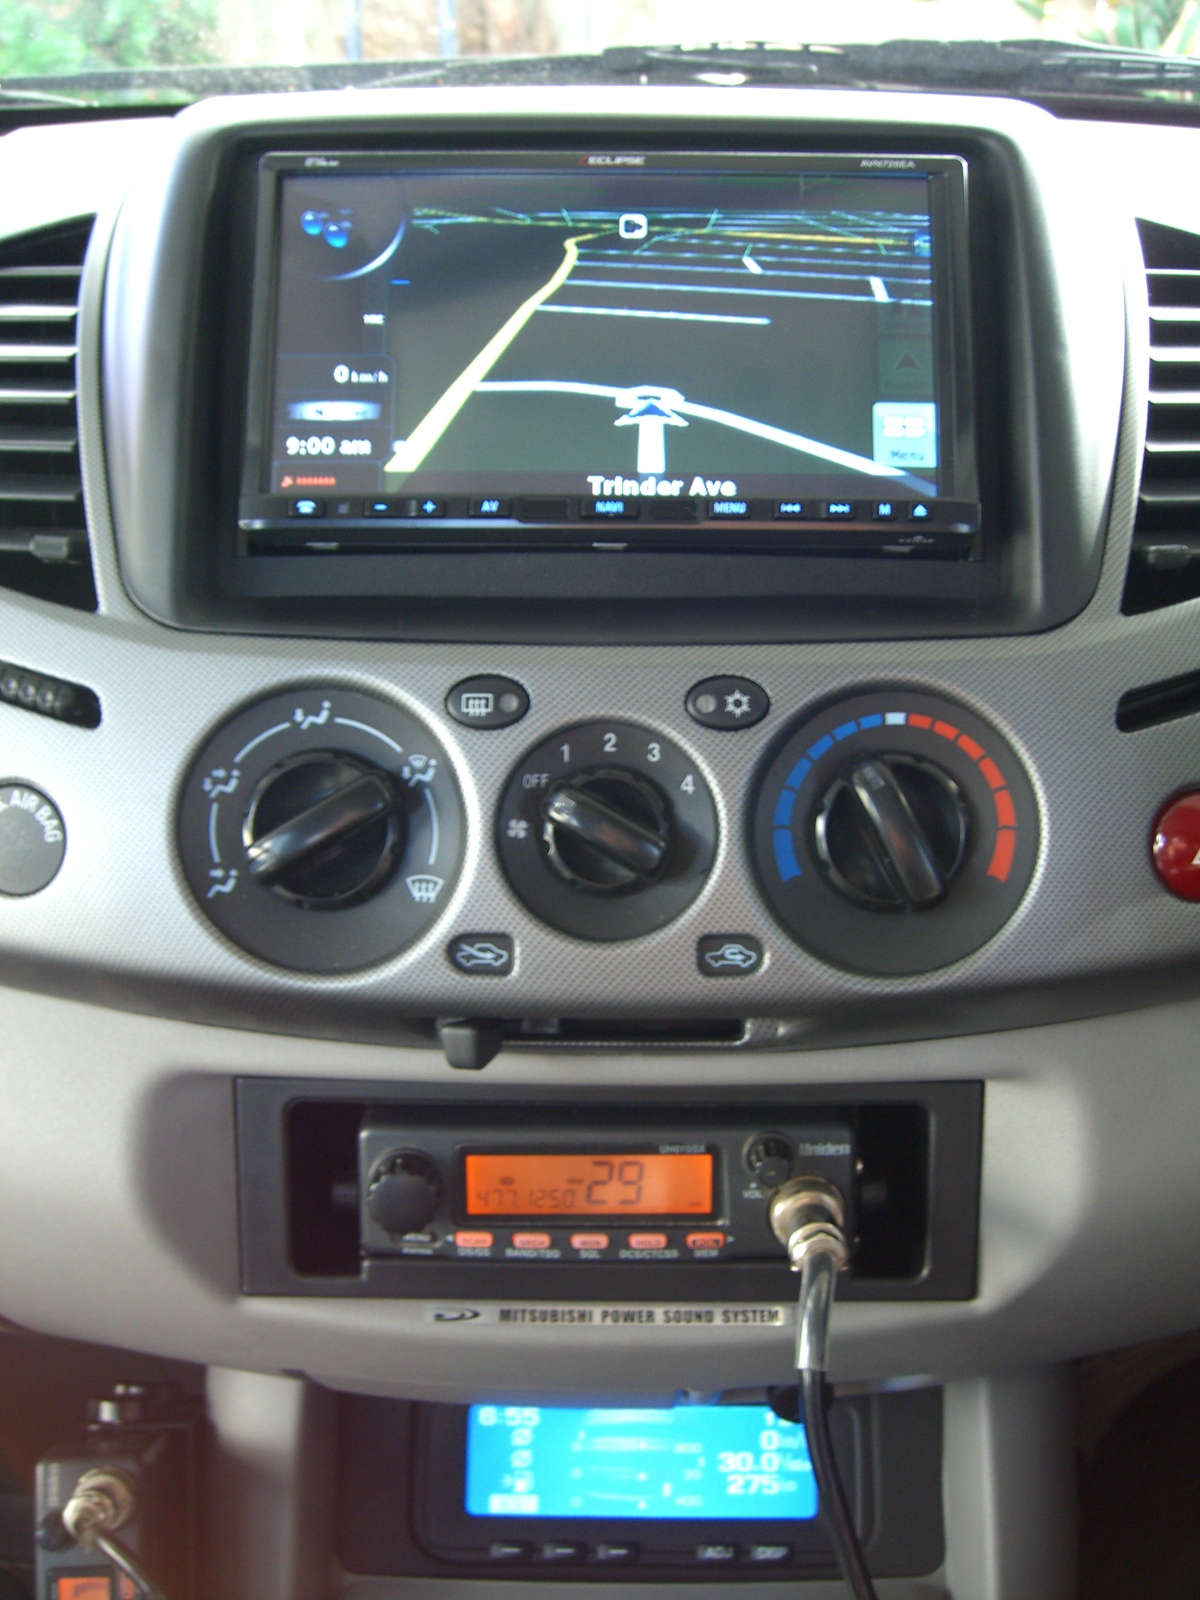 Mitsubishi Triton In Dash GPS Navigation, Bluetooth & Relocate the head up display